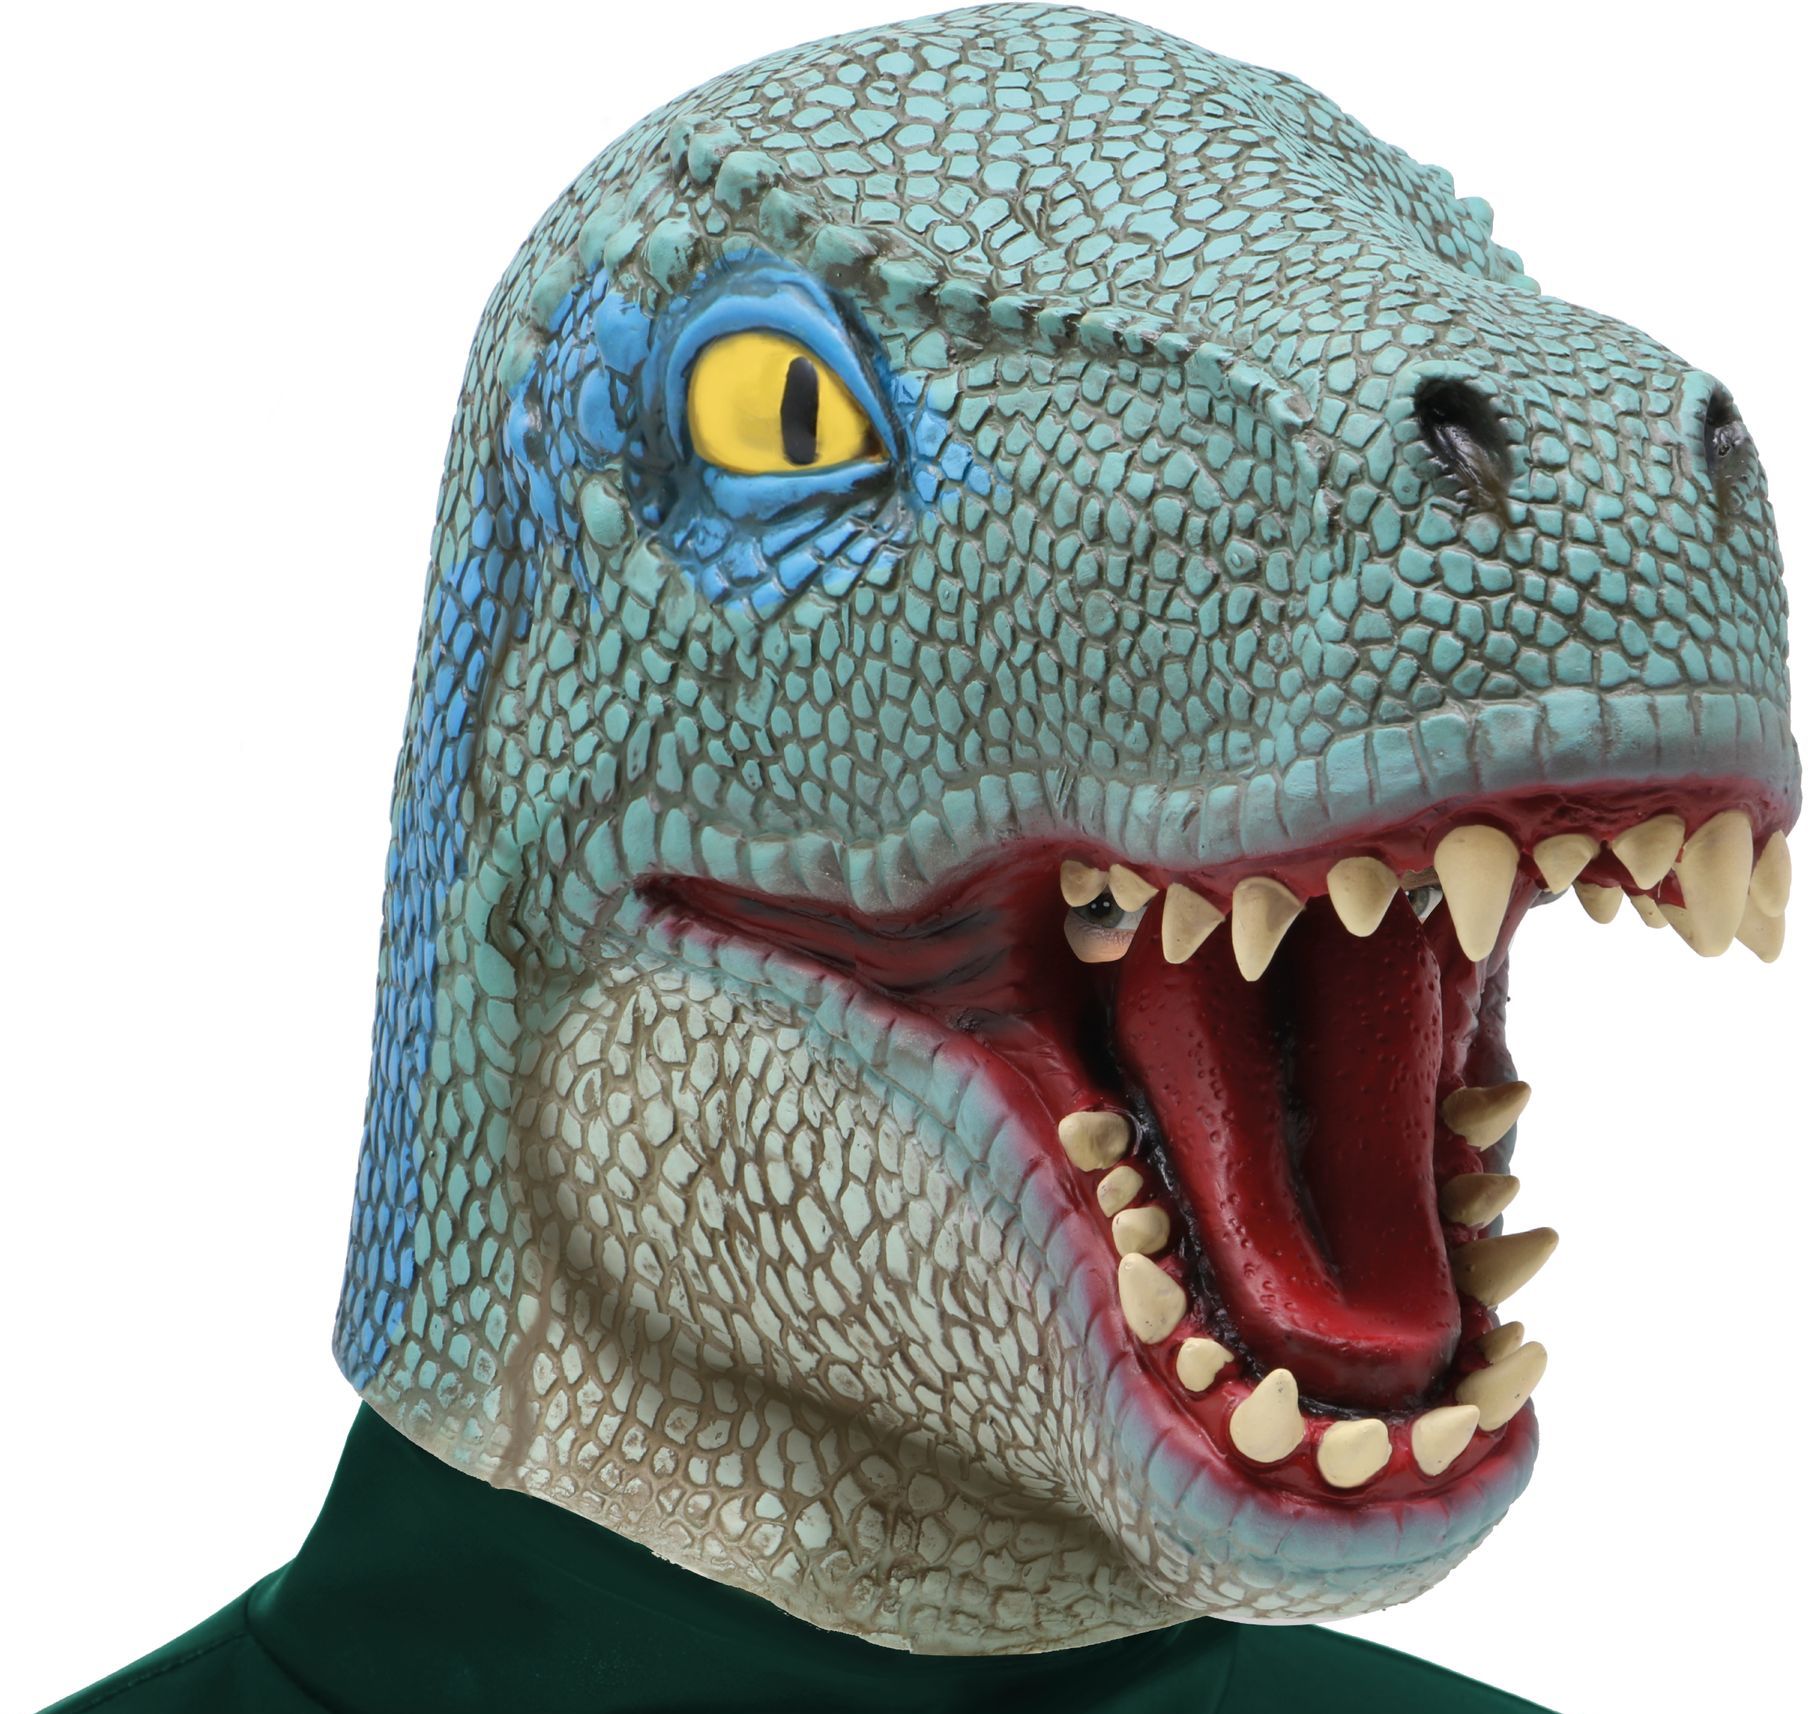 Dinosaurus latex masker